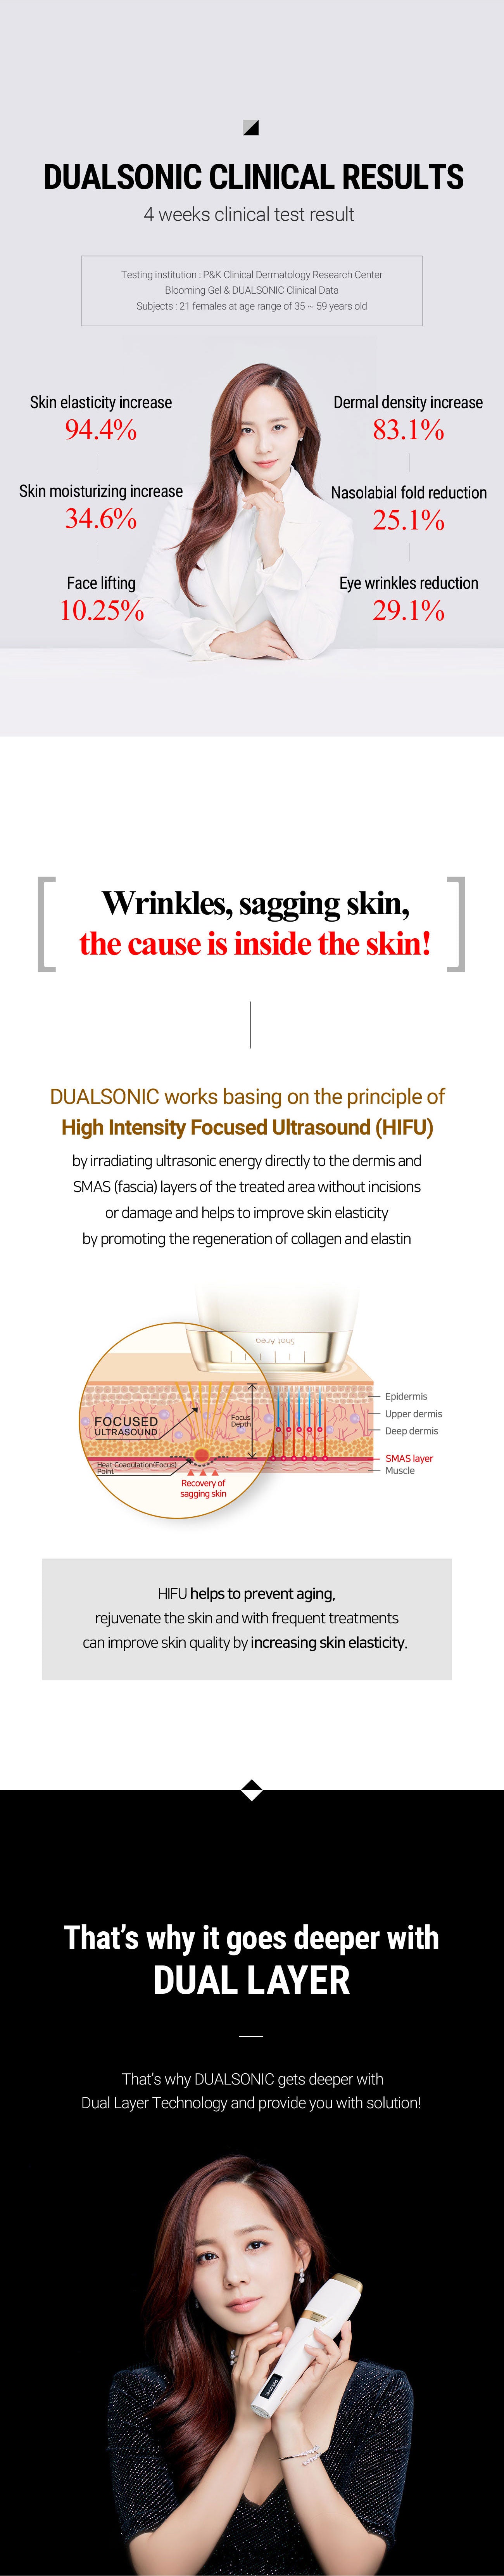 Dualsonic Professional Proven Clinical Results for HIFU treatment Malaysia | BeautyFoo Mall Malaysia